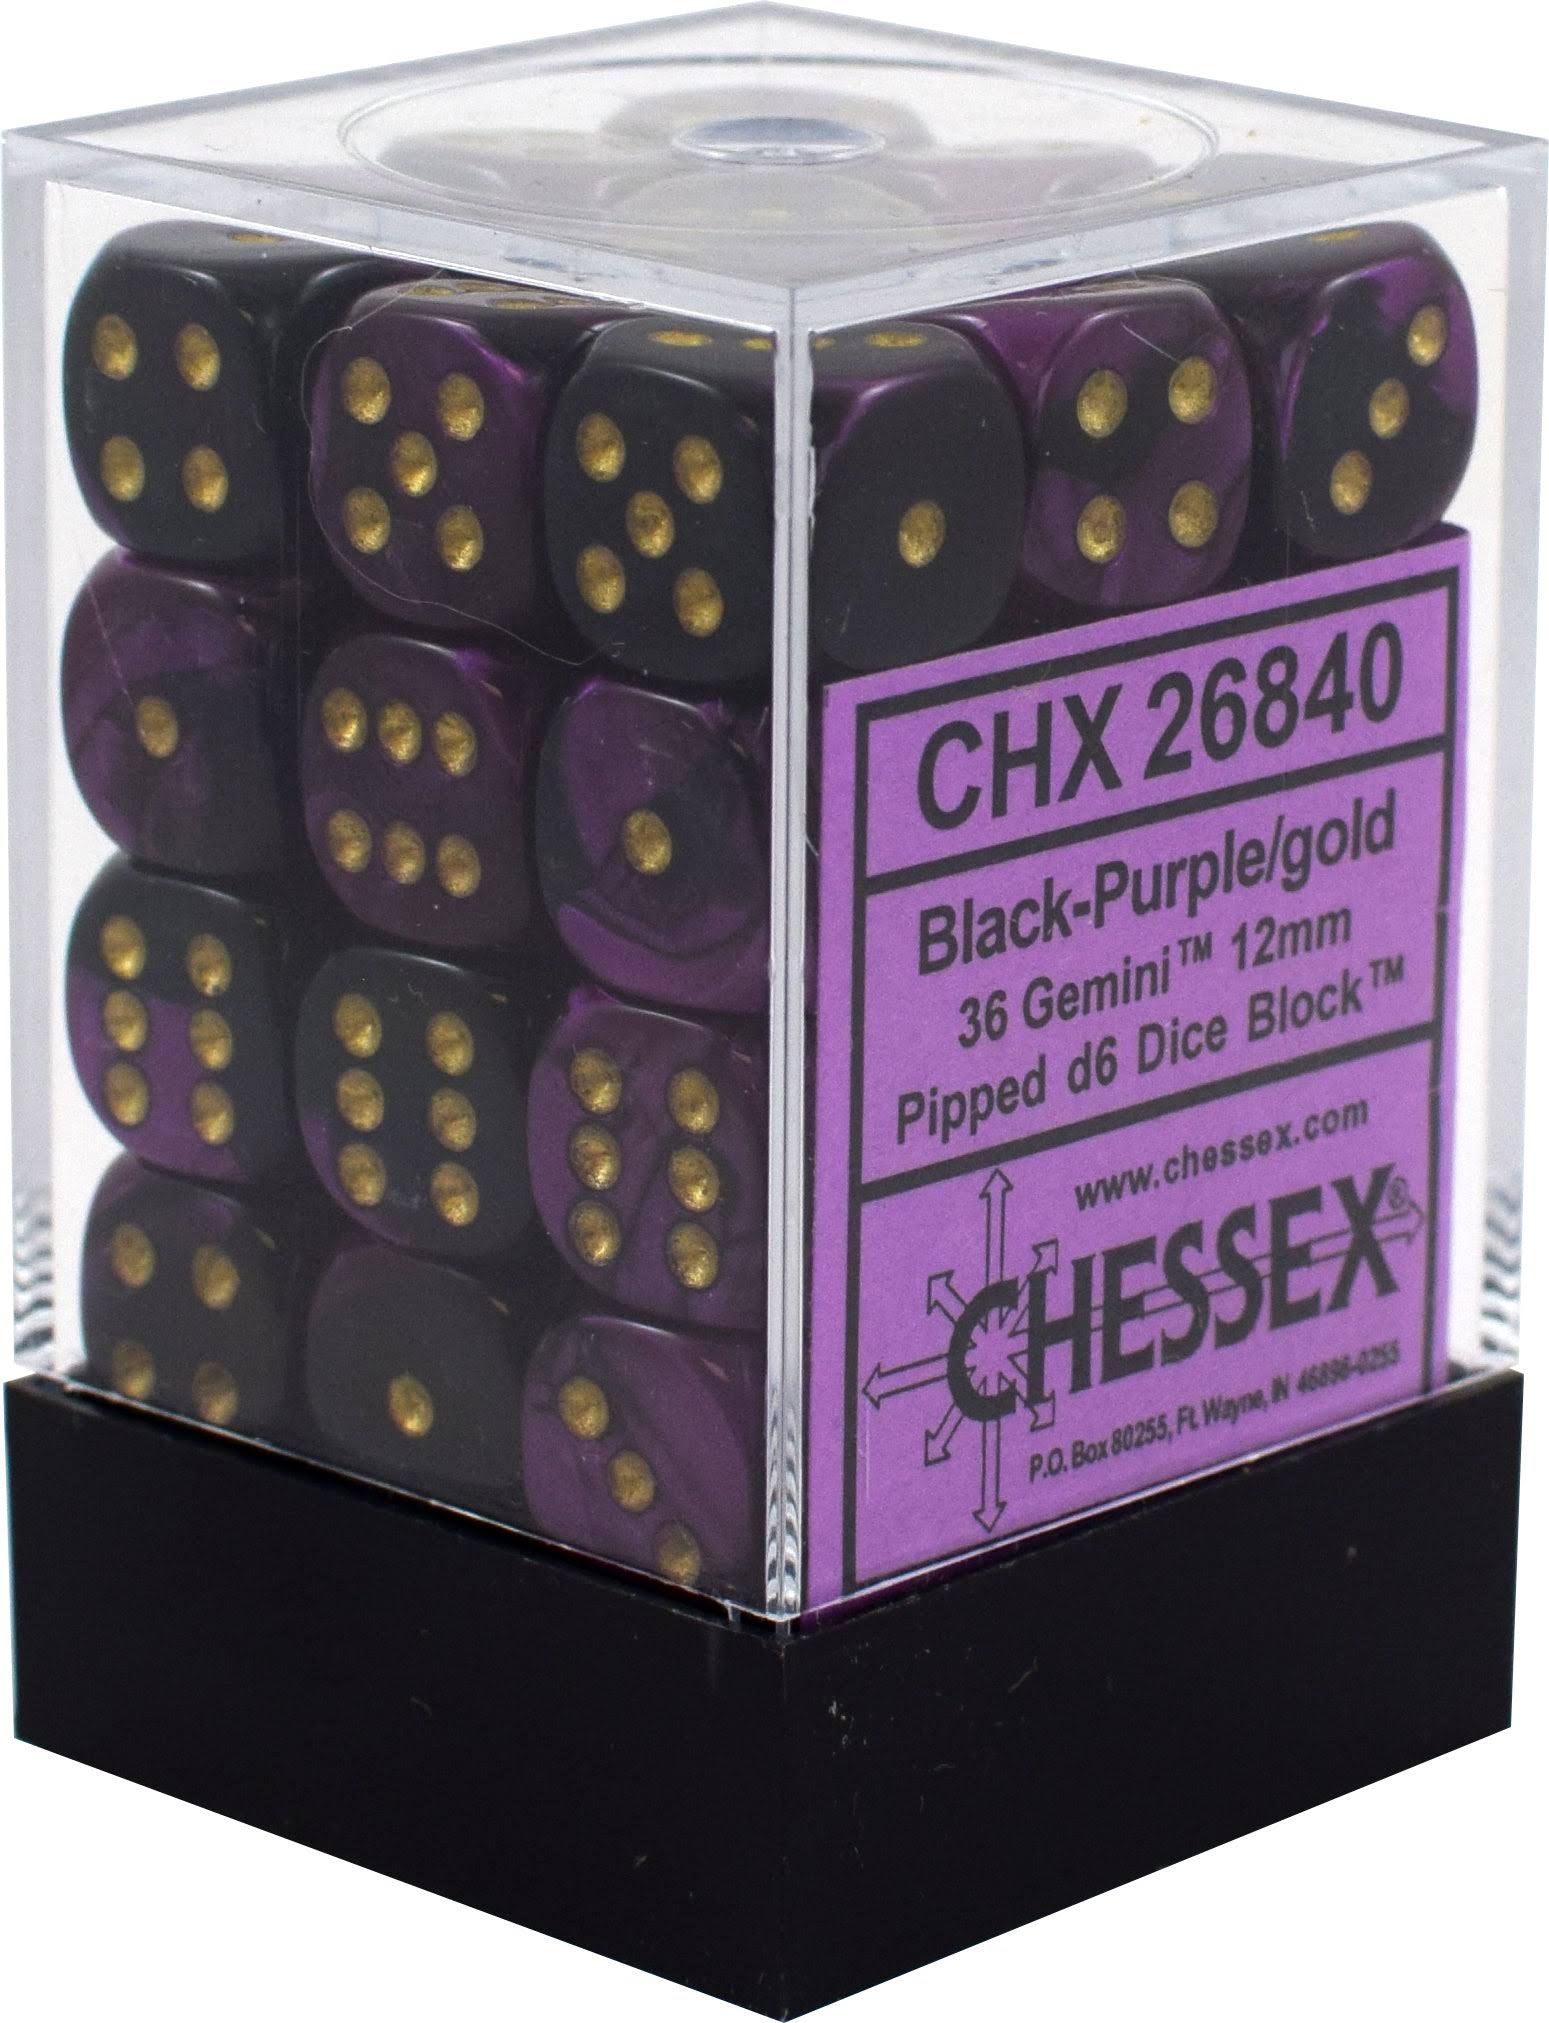 Chessex Gemini D6 12mm Dice: Black-Purple/Gold